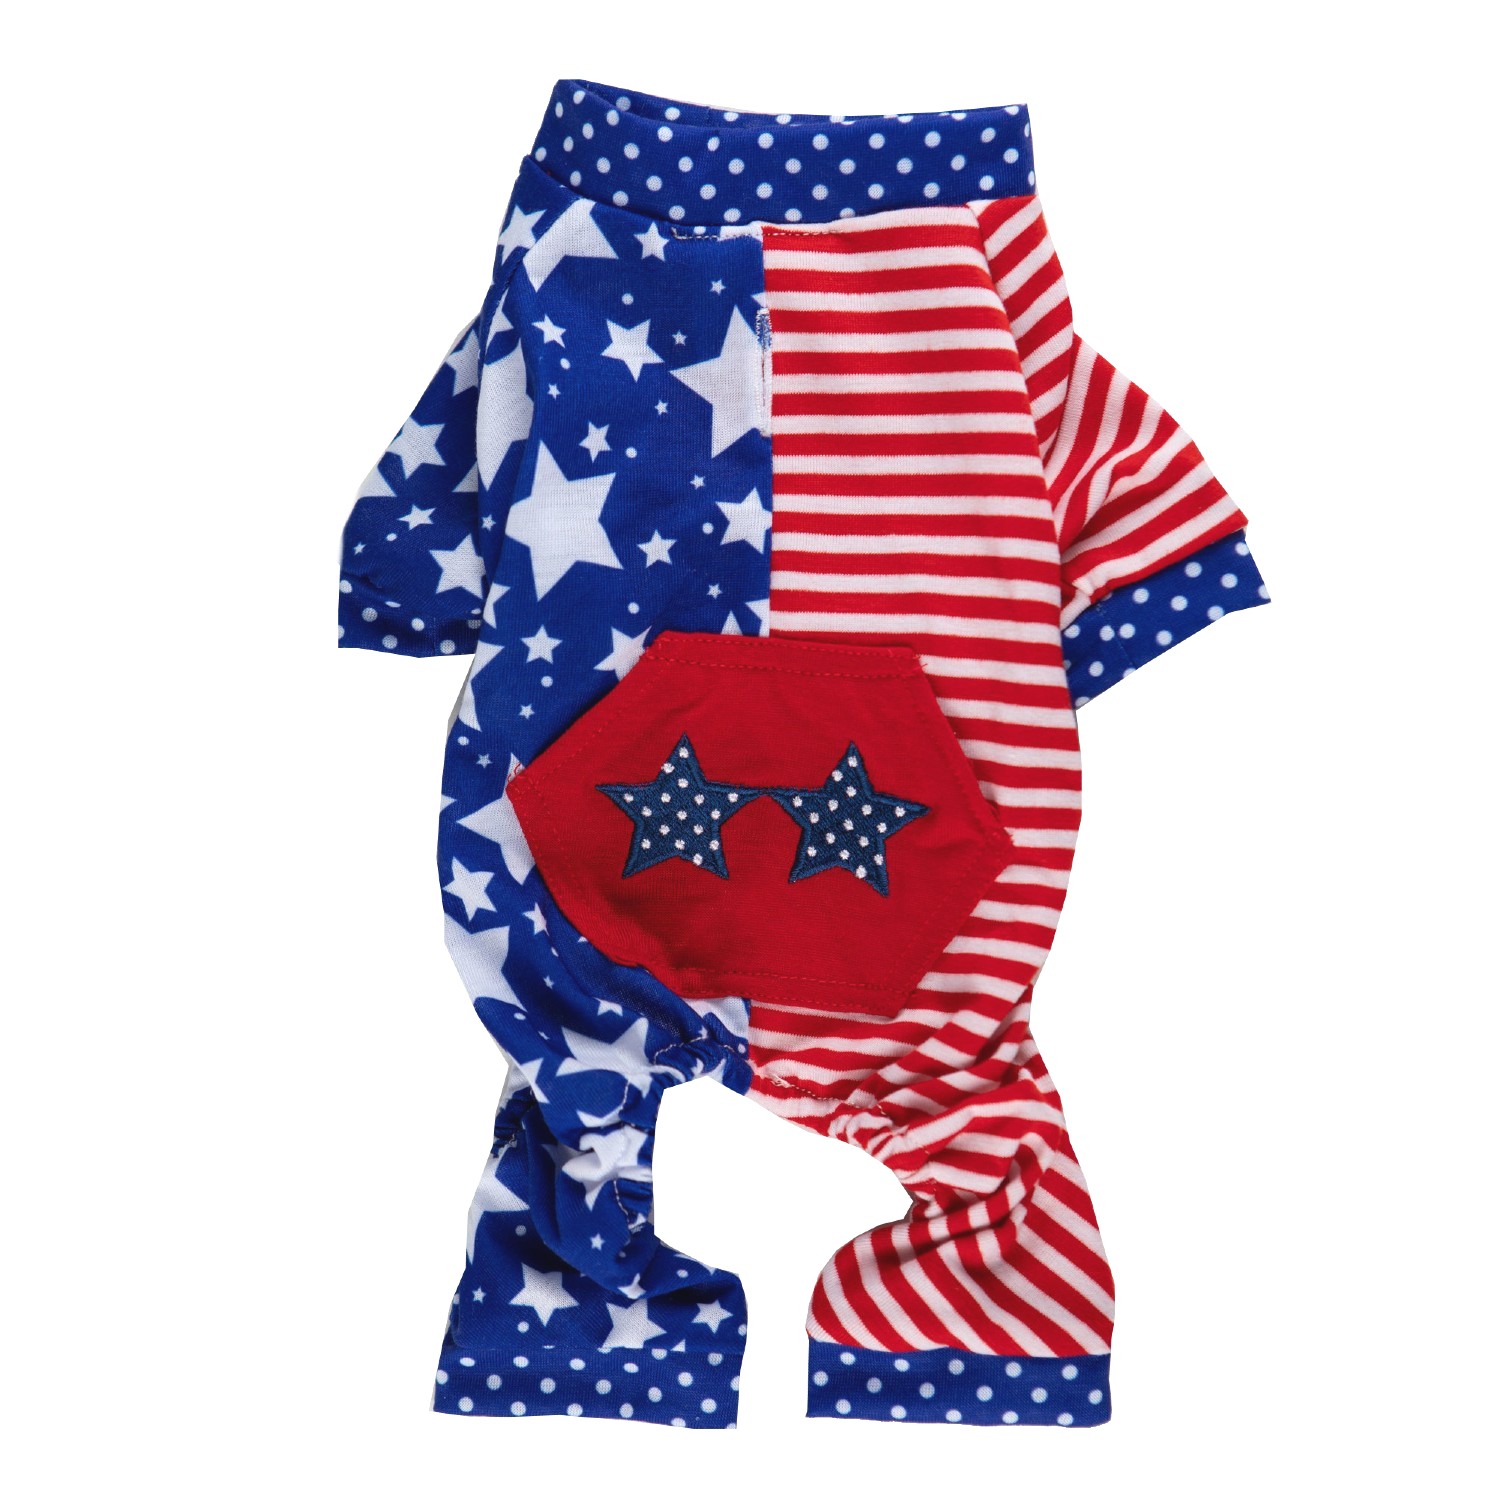 Max's Closet Americana Dog Pajamas - Stars & Stripes